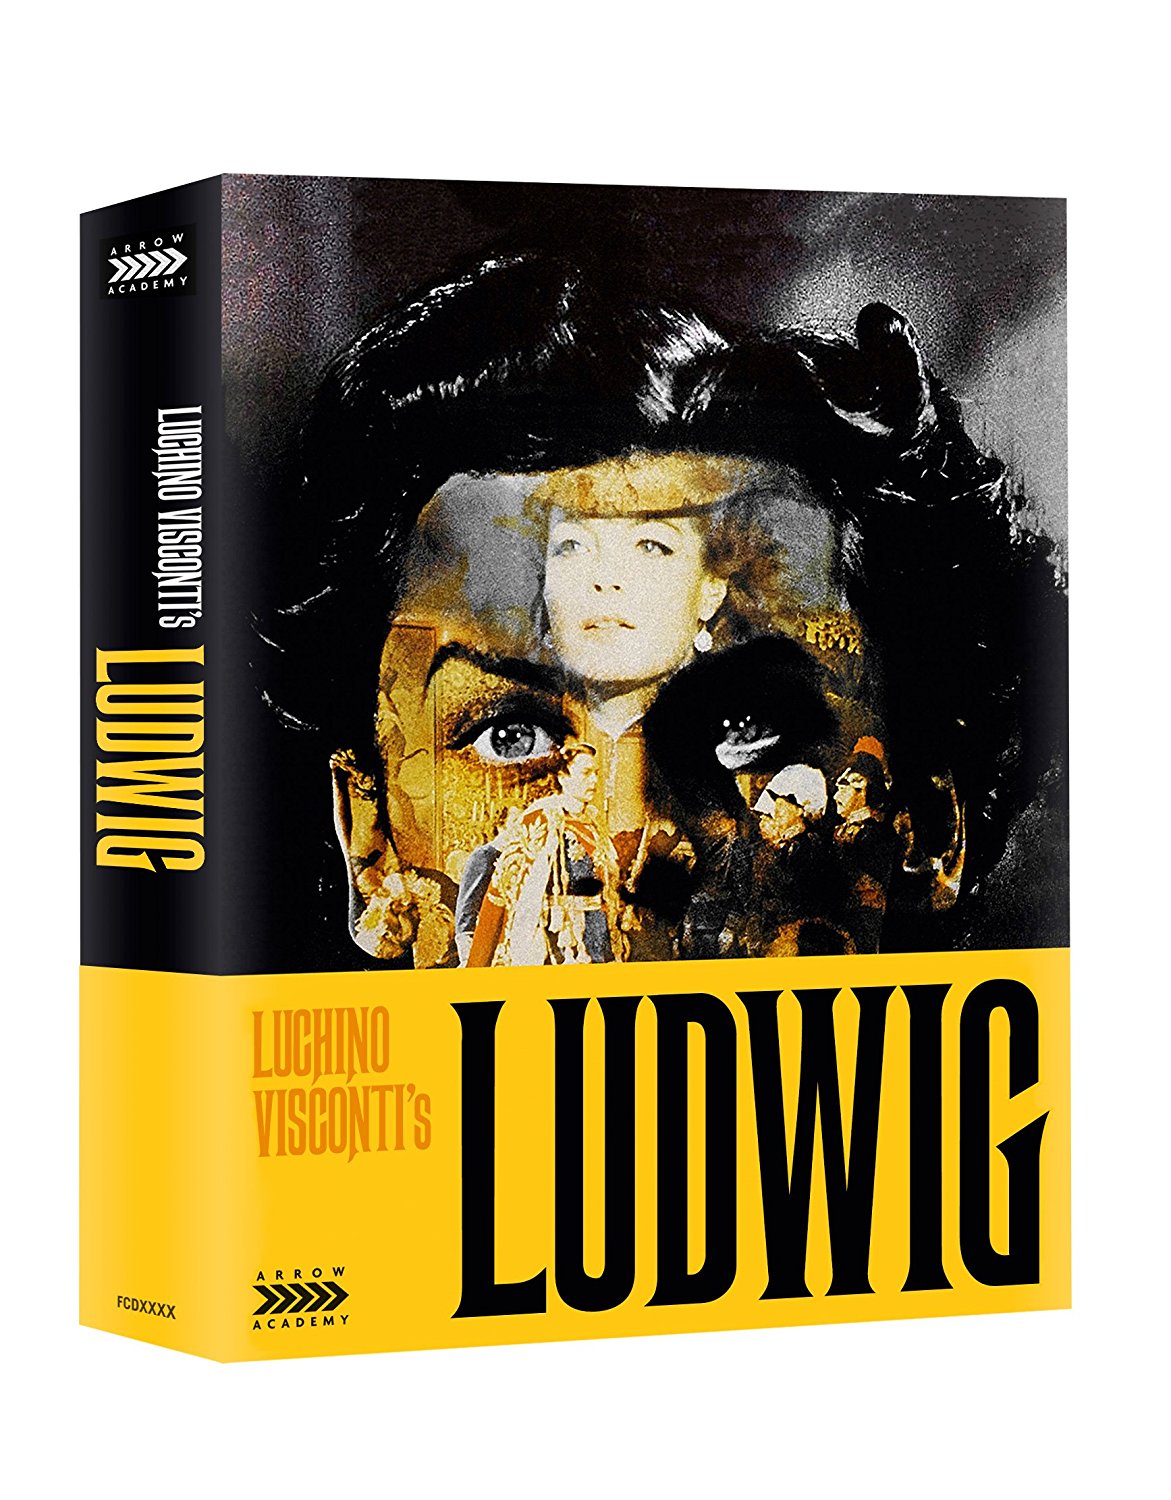 Ludwig box